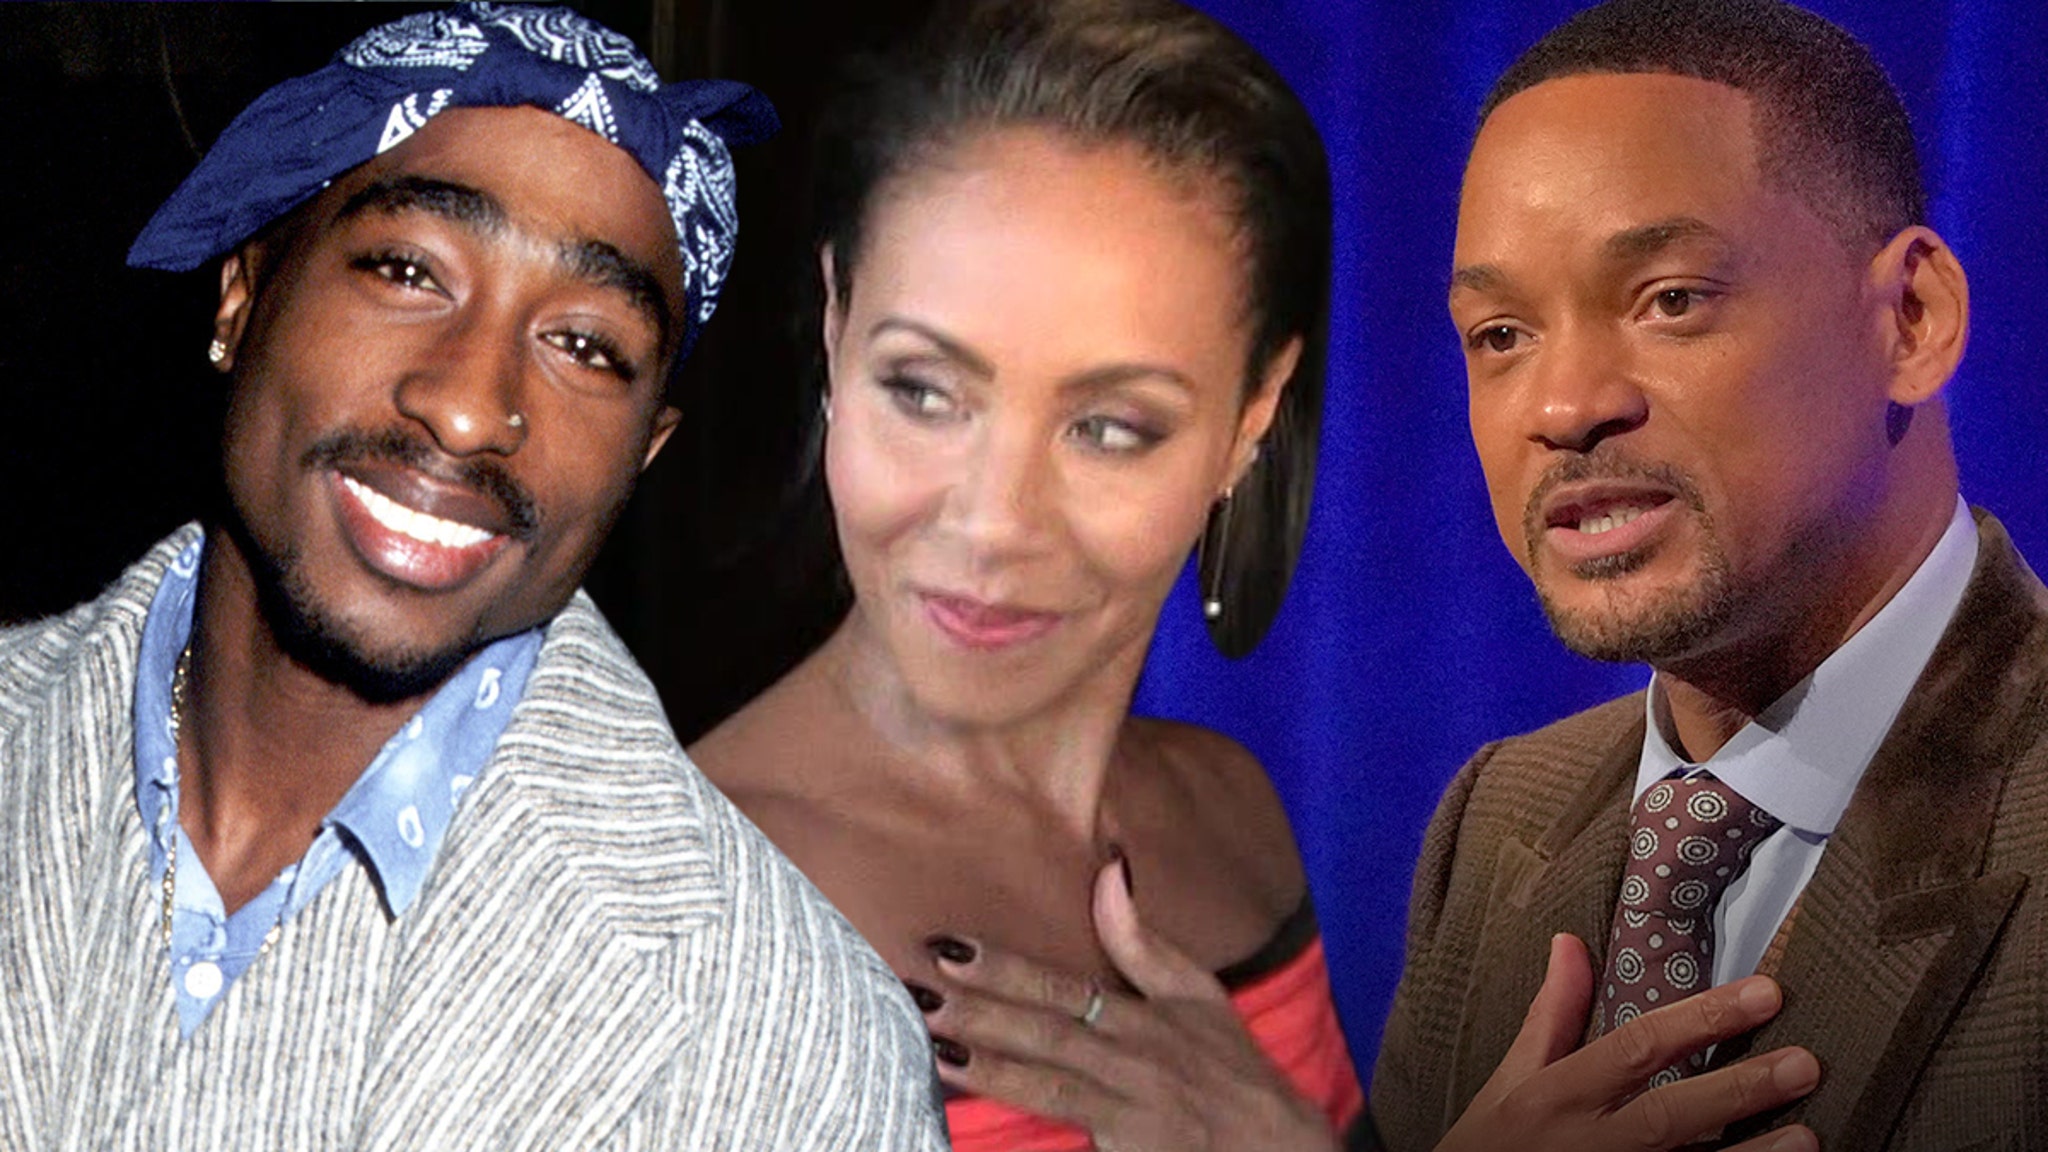 Jada Pinkett Smith definisce Tupac la sua “anima gemella”, ma non aveva chimica